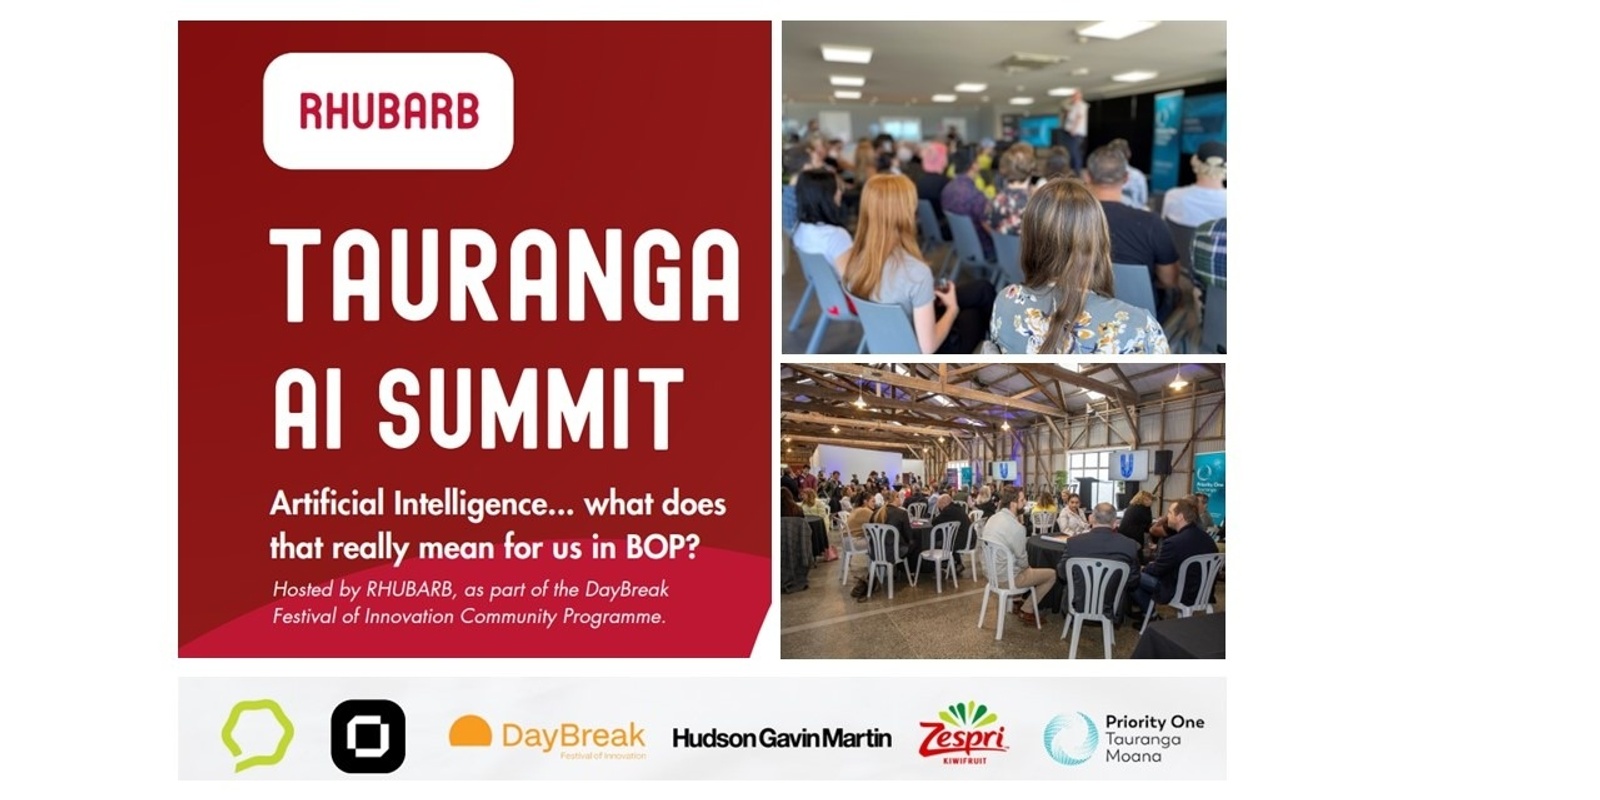 Banner image for RHUBARB Tauranga AI Summit